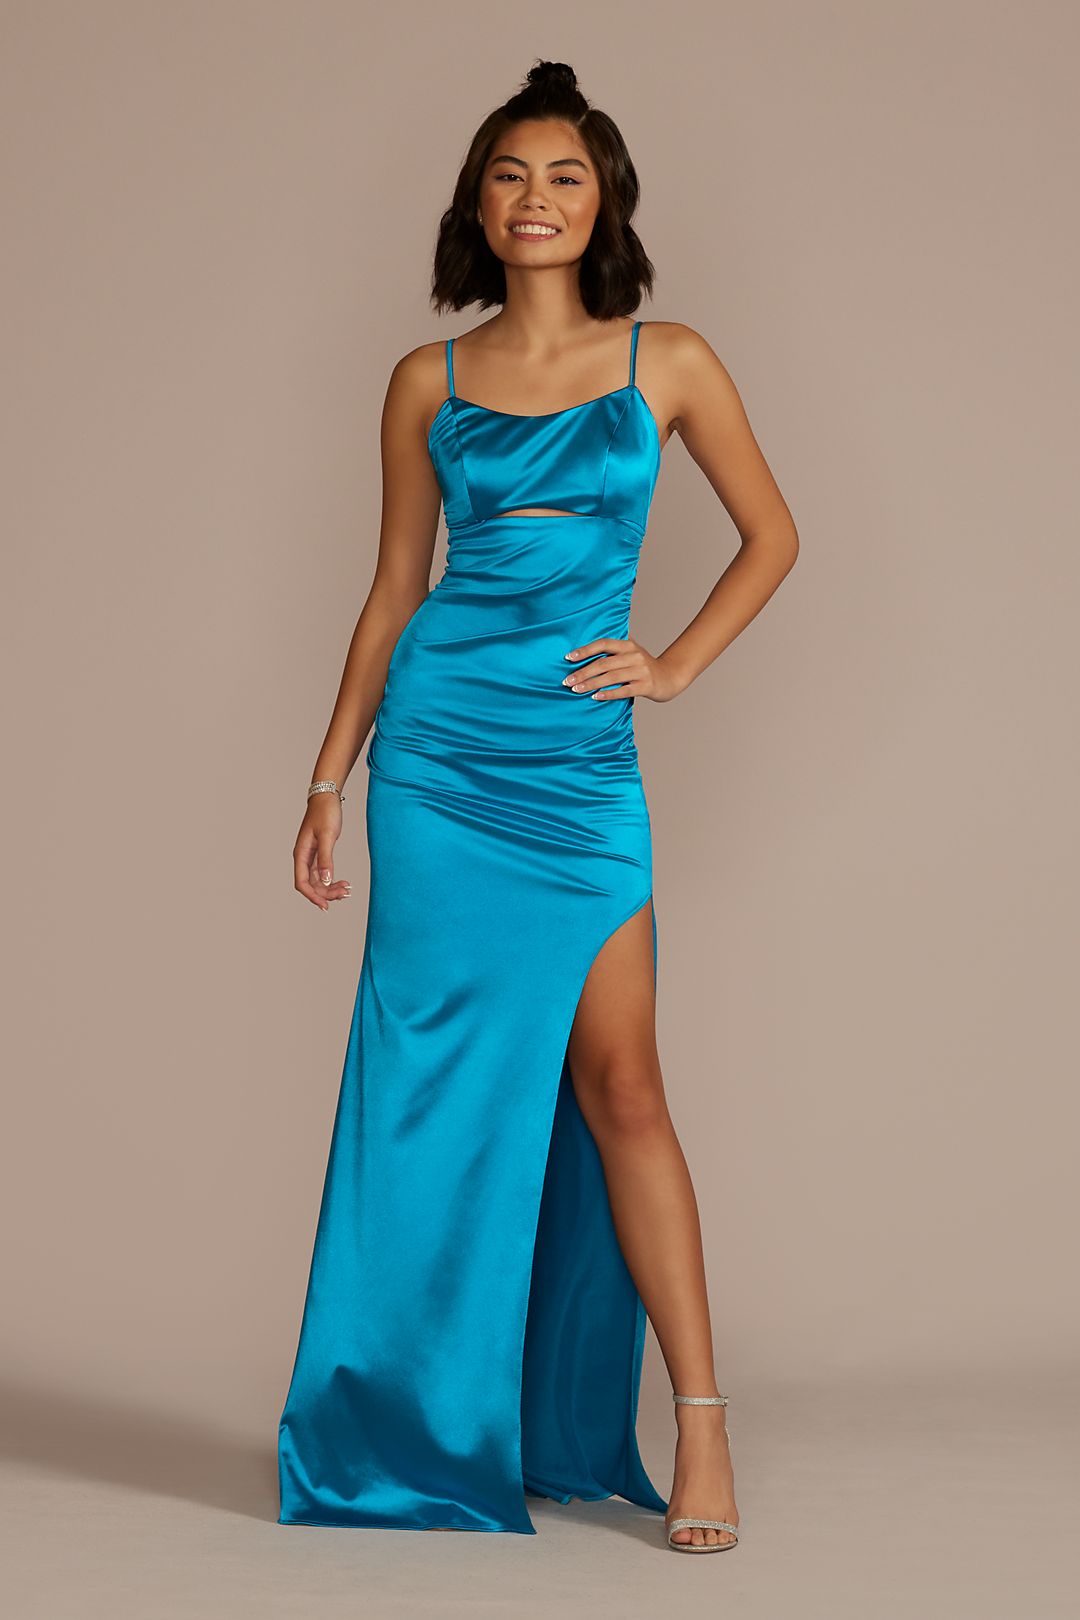 Blue Satin Prom Dress with Slides on Side